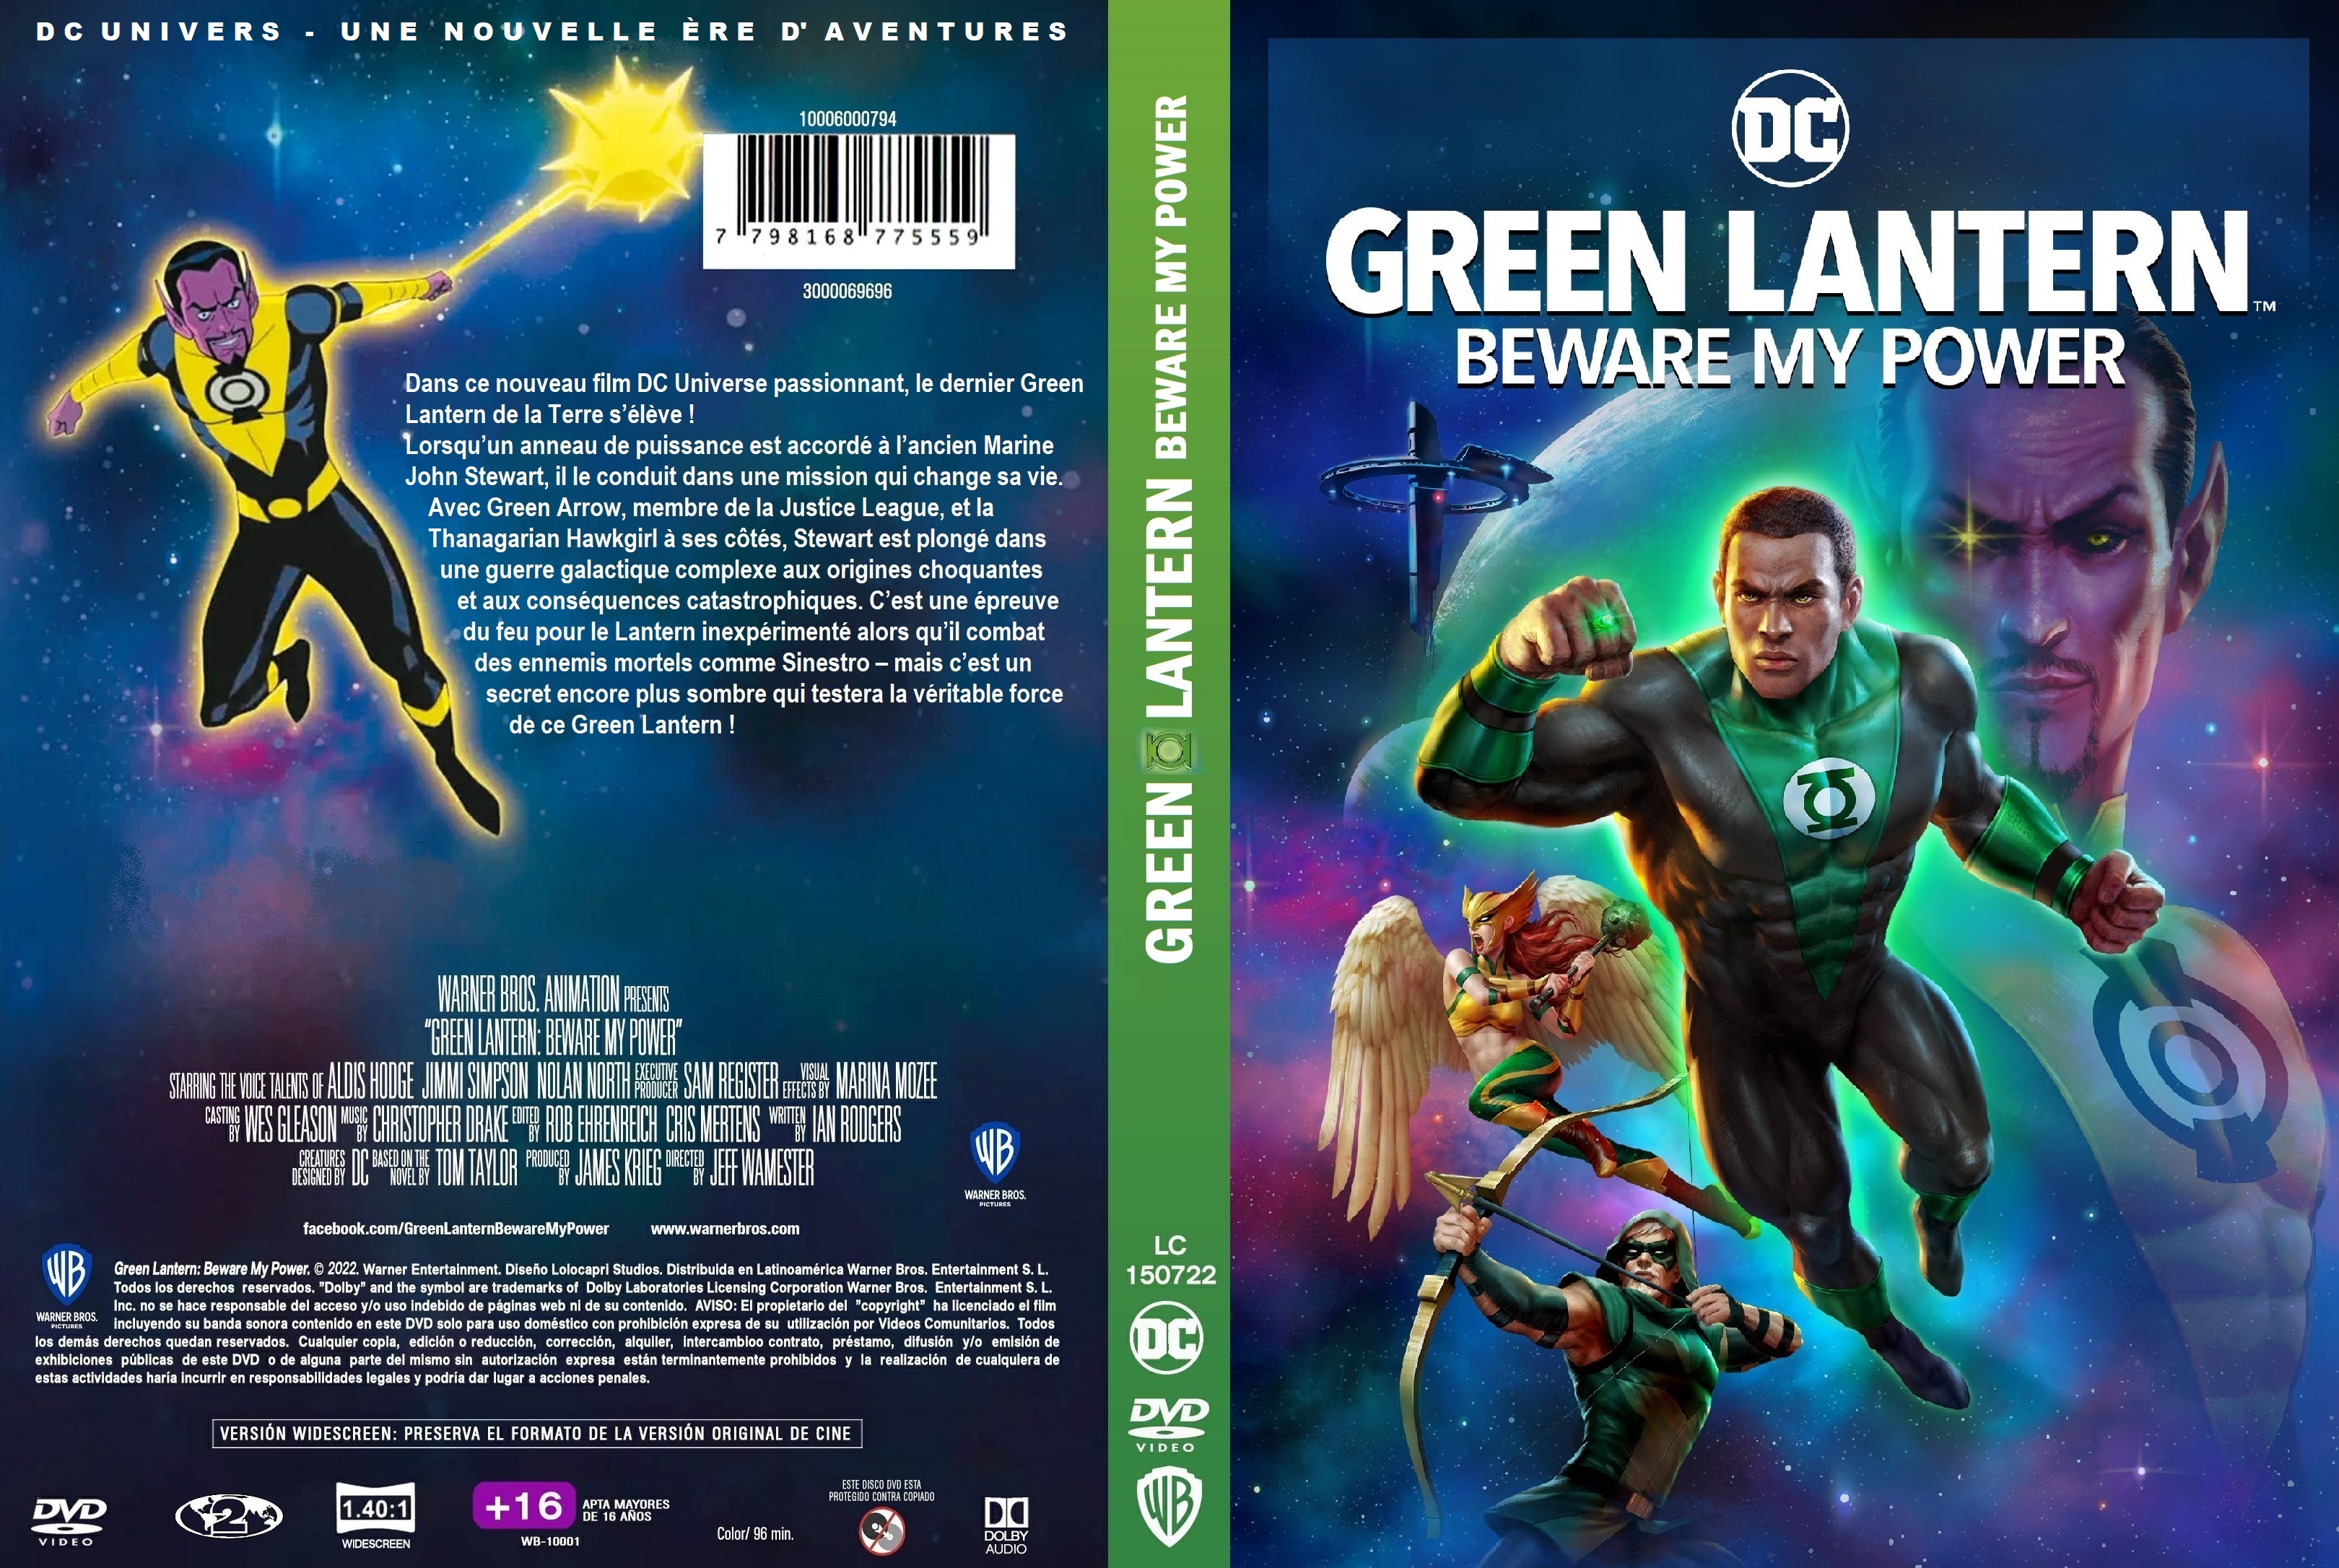 Jaquette DVD Green Lantern Beware My Power custom